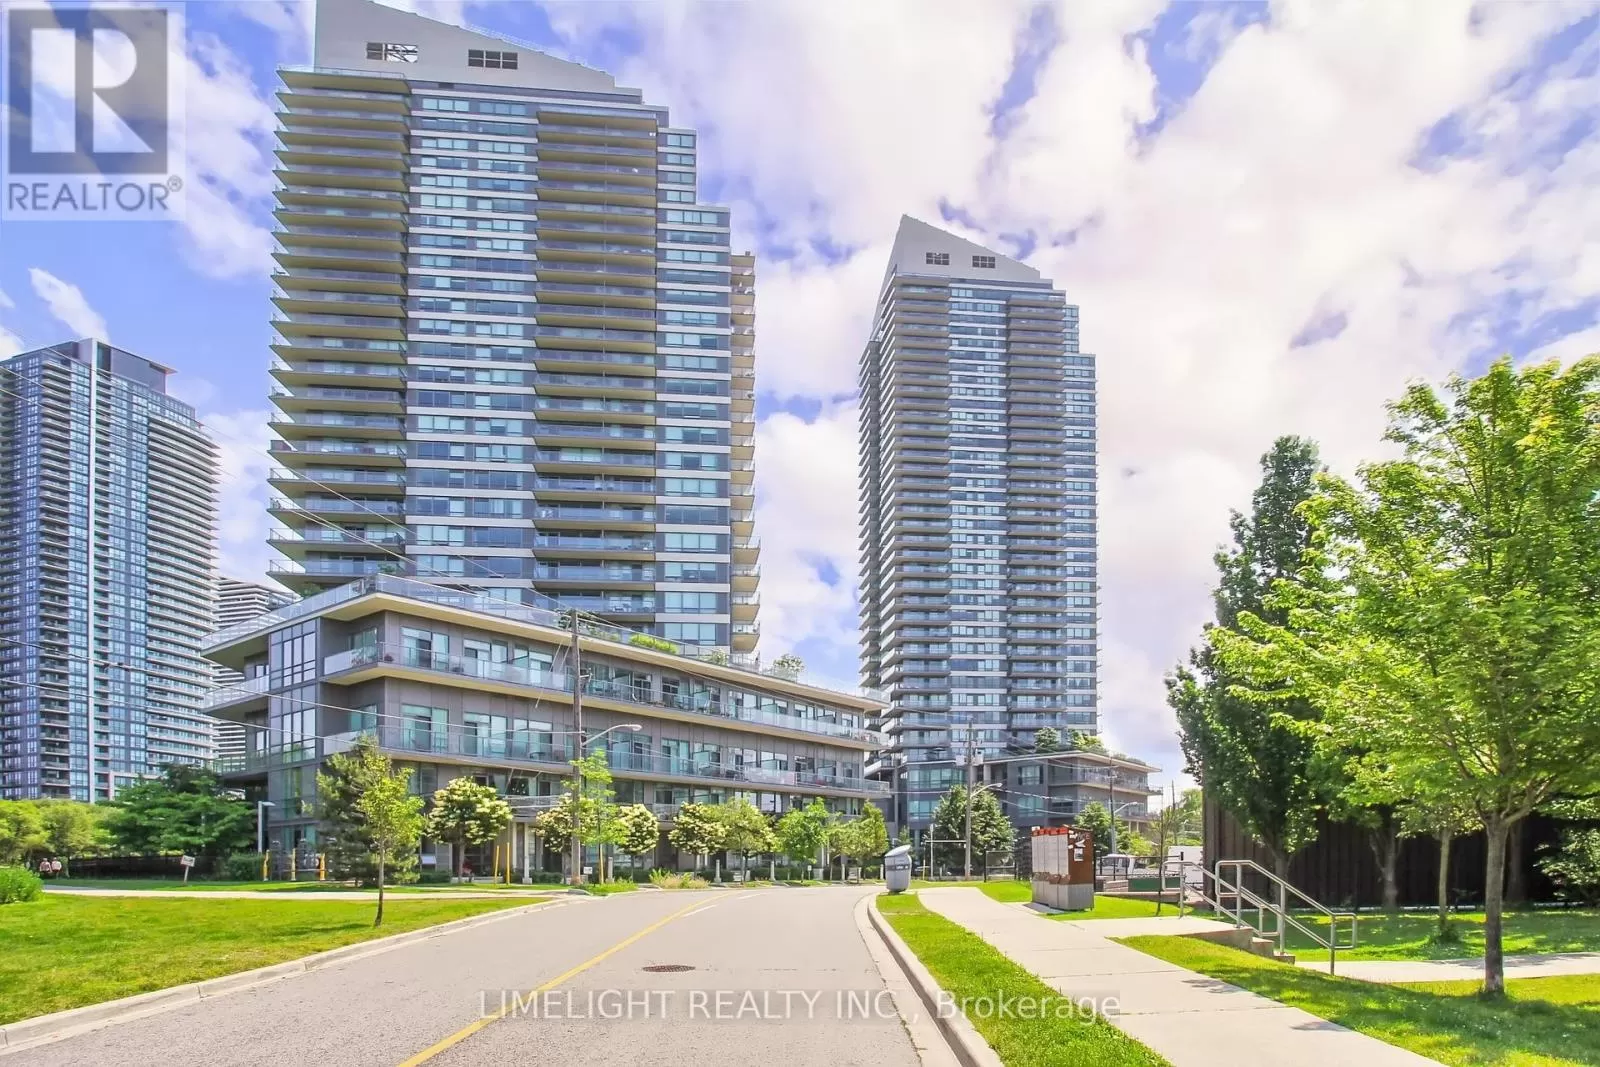 Apartment for rent: 2208 - 2240 Lake Shore Boulevard W, Toronto, Ontario M8V 0B1